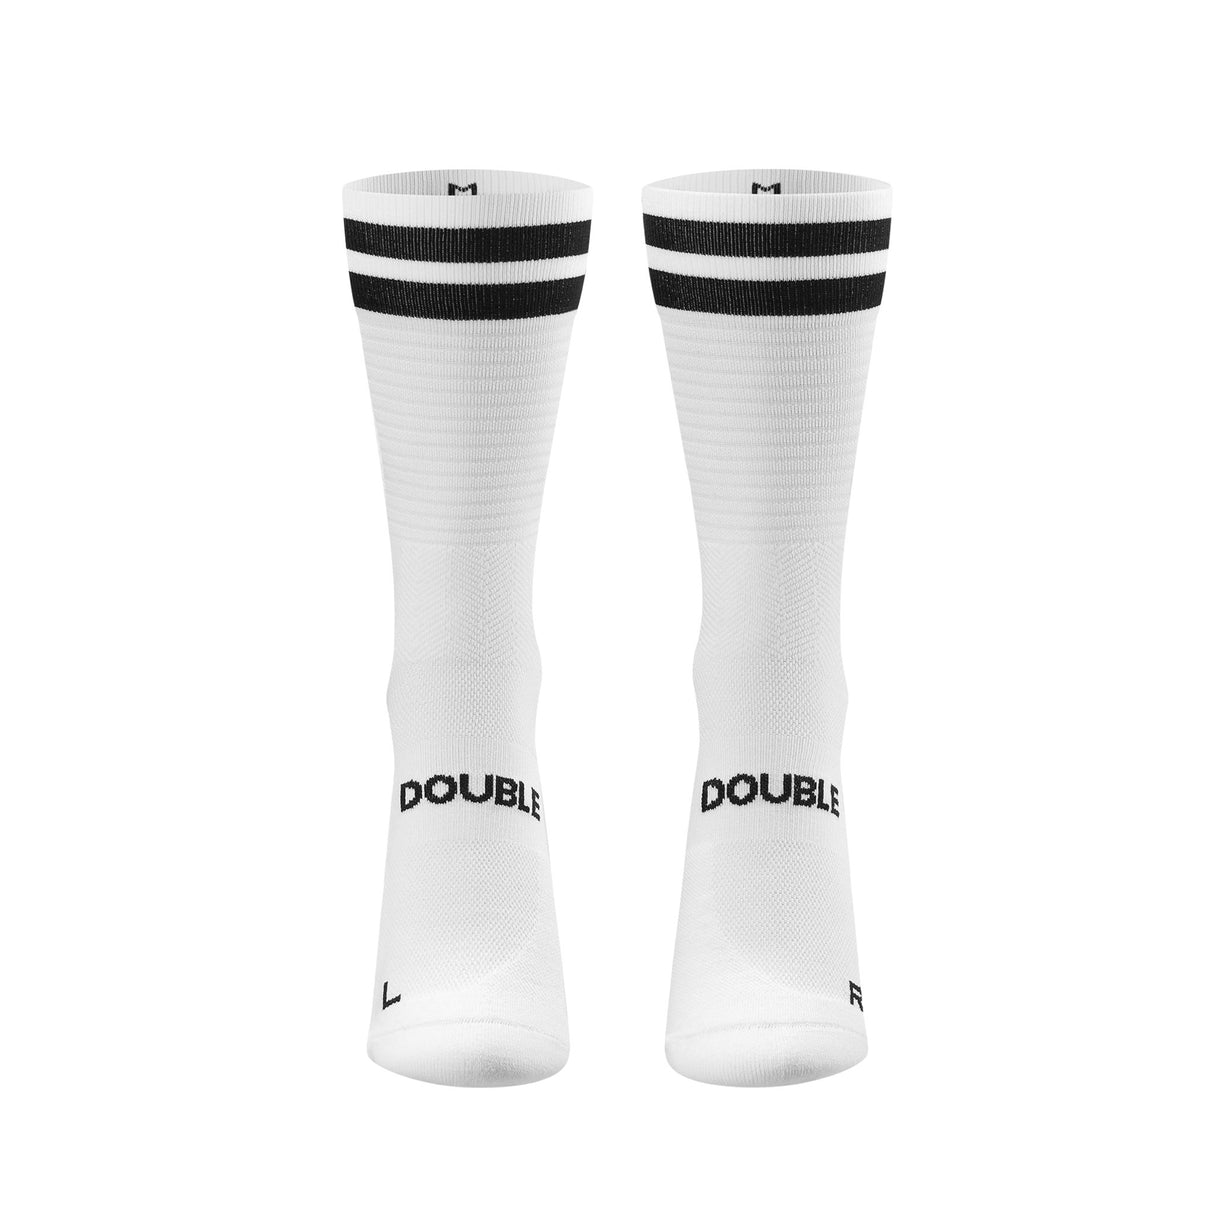 Personal Best Performance Sock-Double Slash white